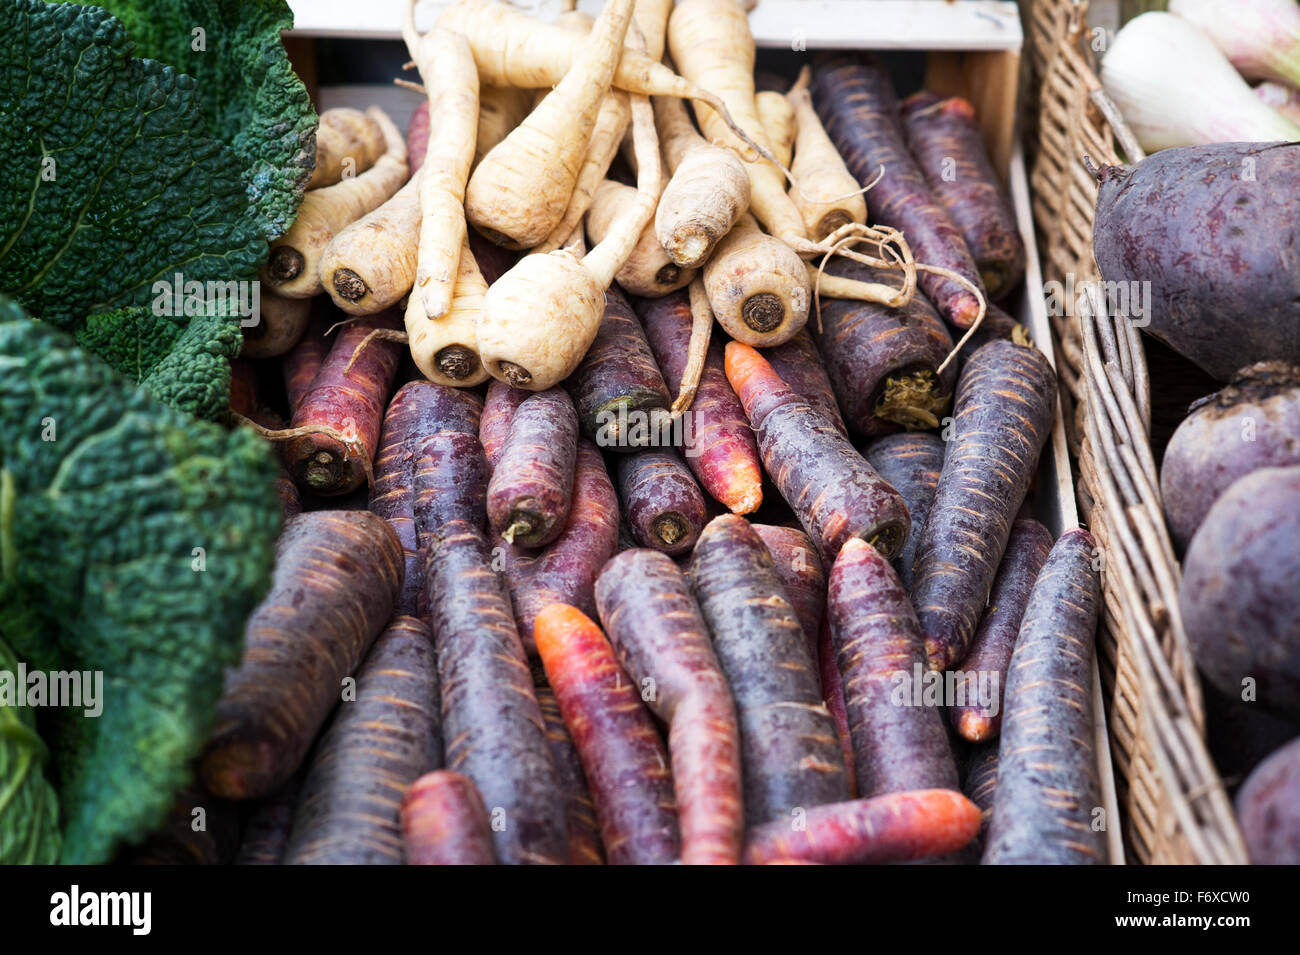 Turnips at a farmers market; Frankfurt, Germany Stock Photo